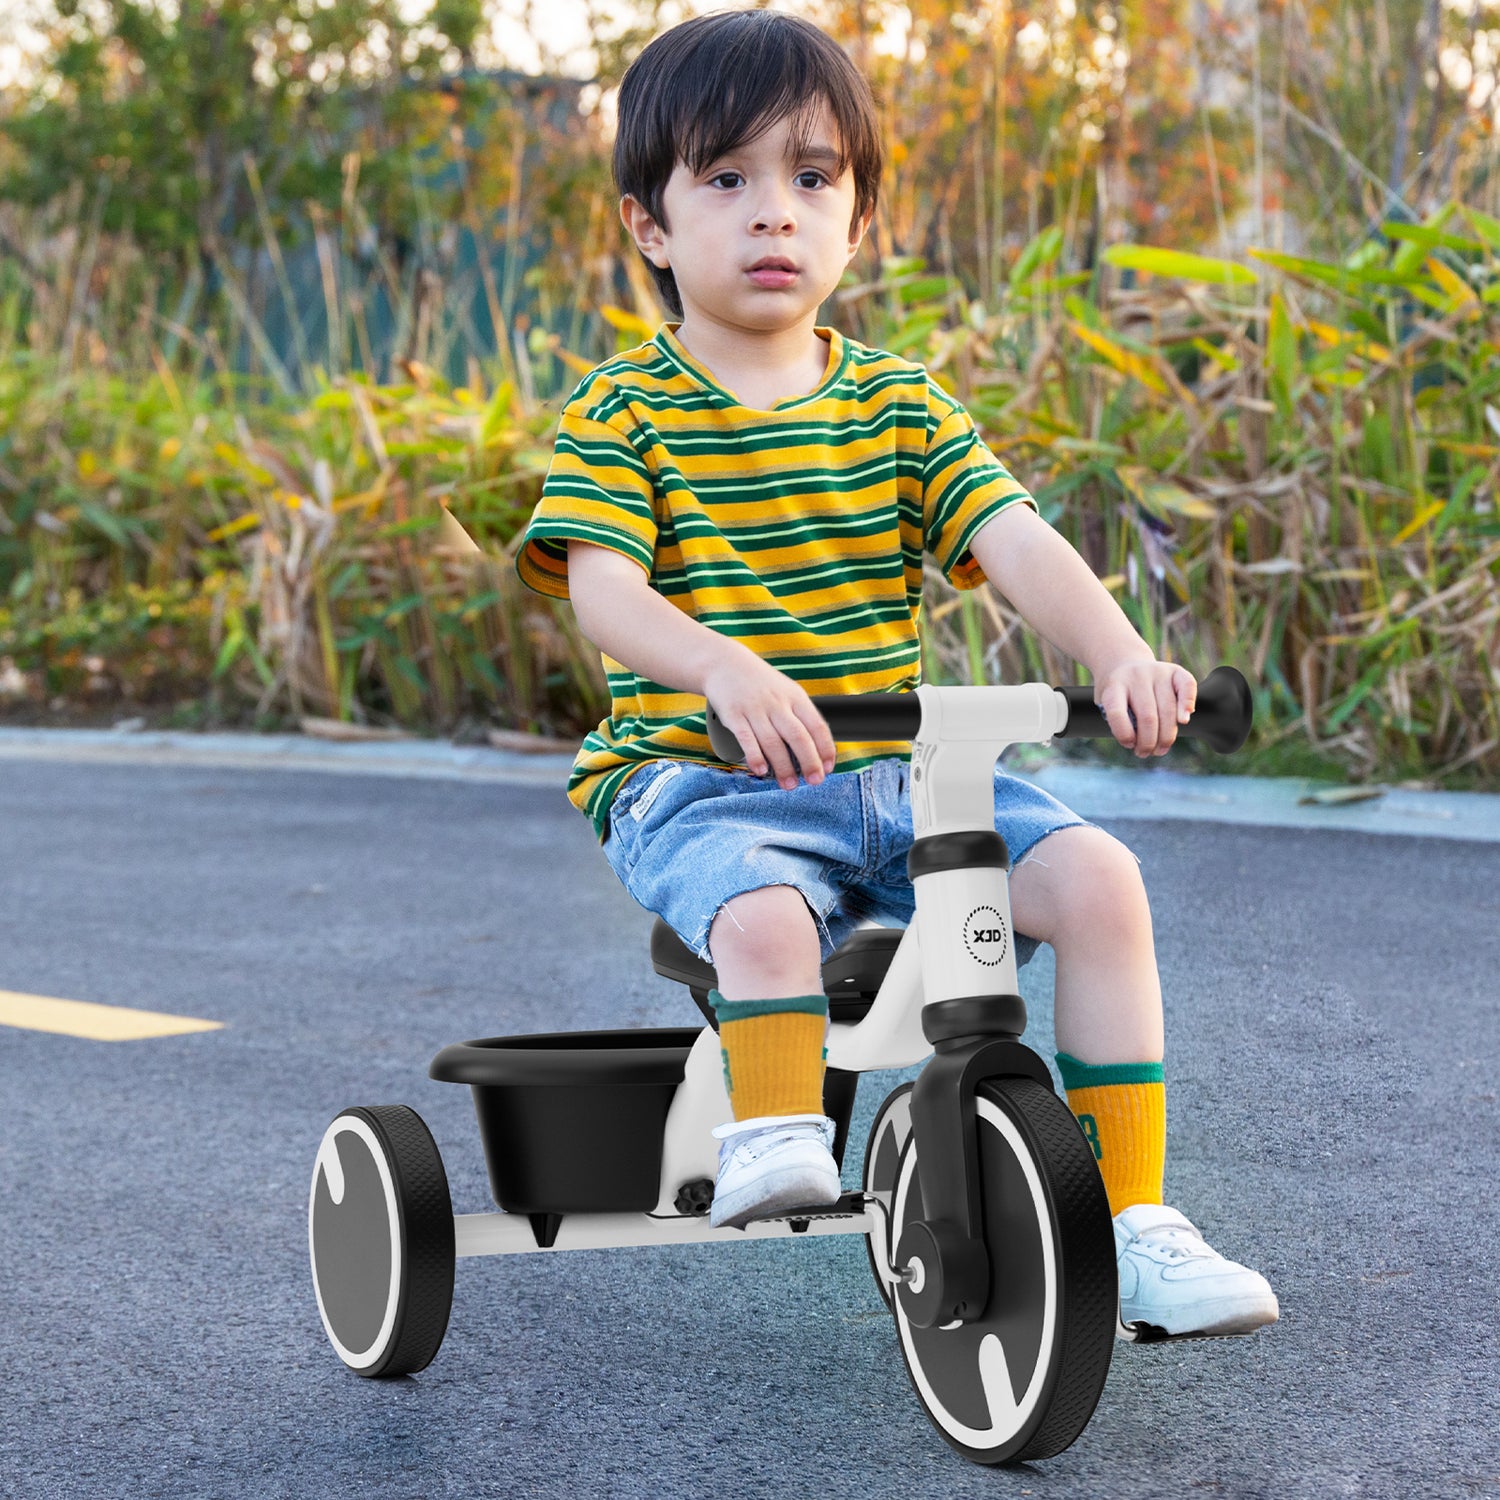 Unlock joy and development with the XJD Toddler Training Balance Bike!